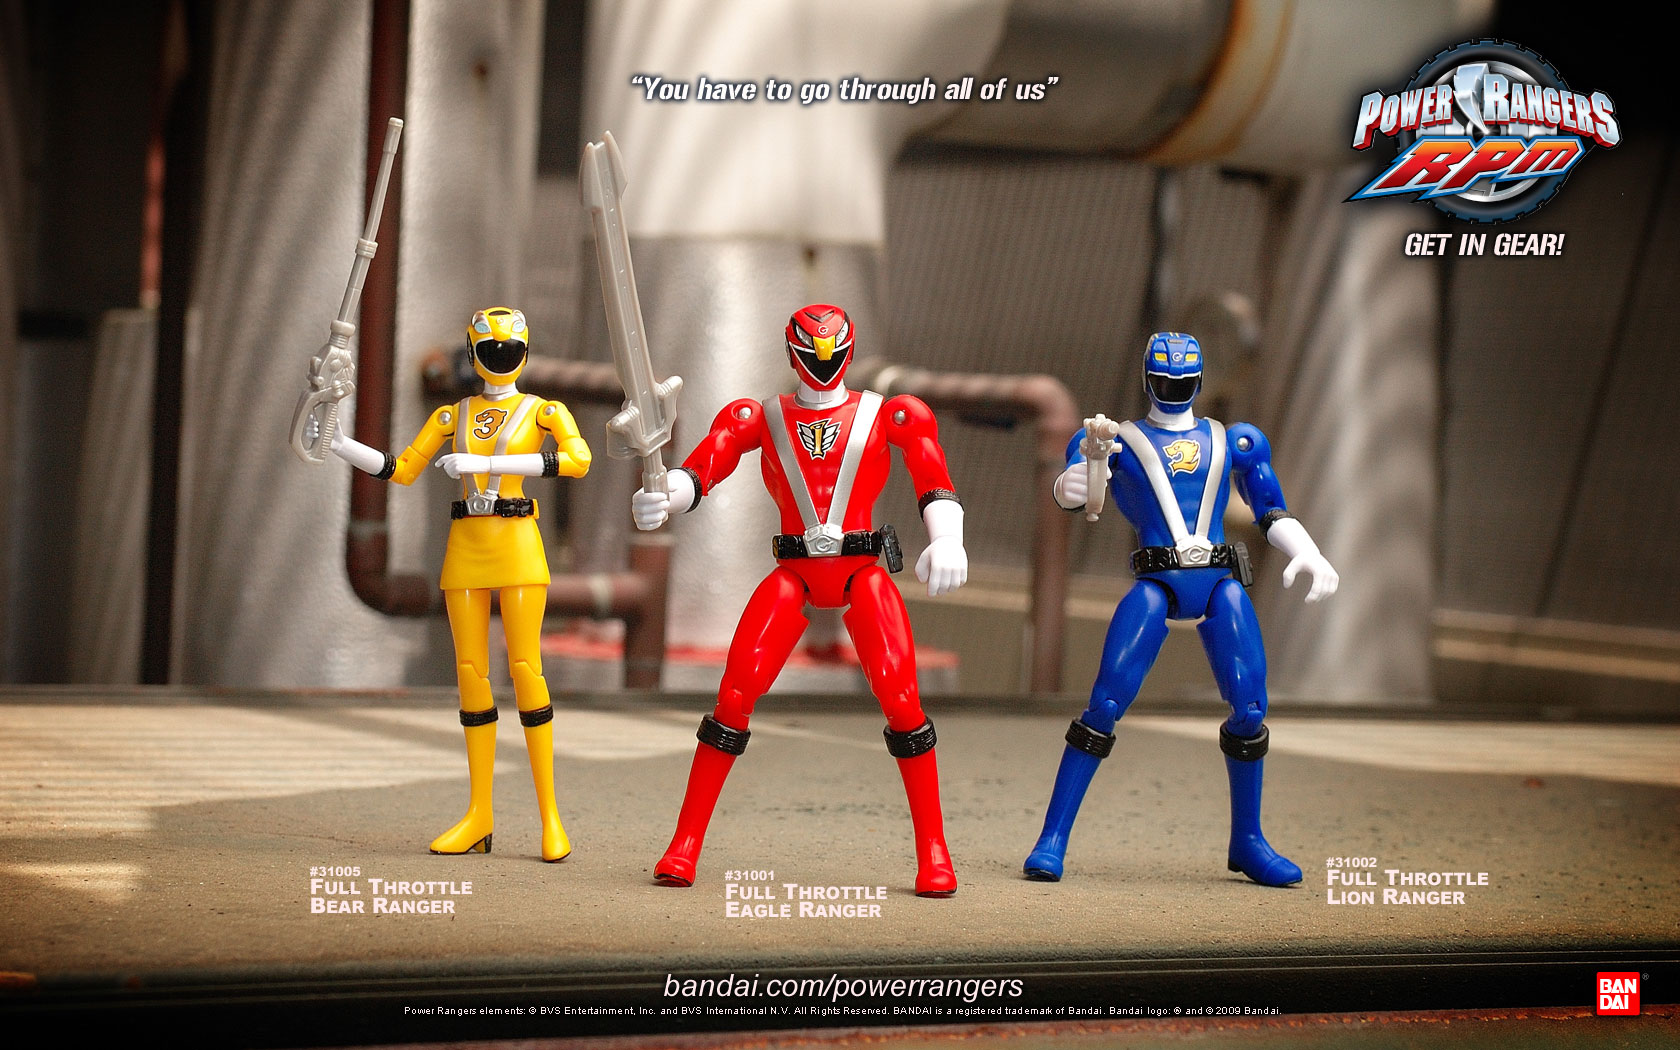 power rangers wallpaper,action figure,toy,fictional character,figurine,superhero